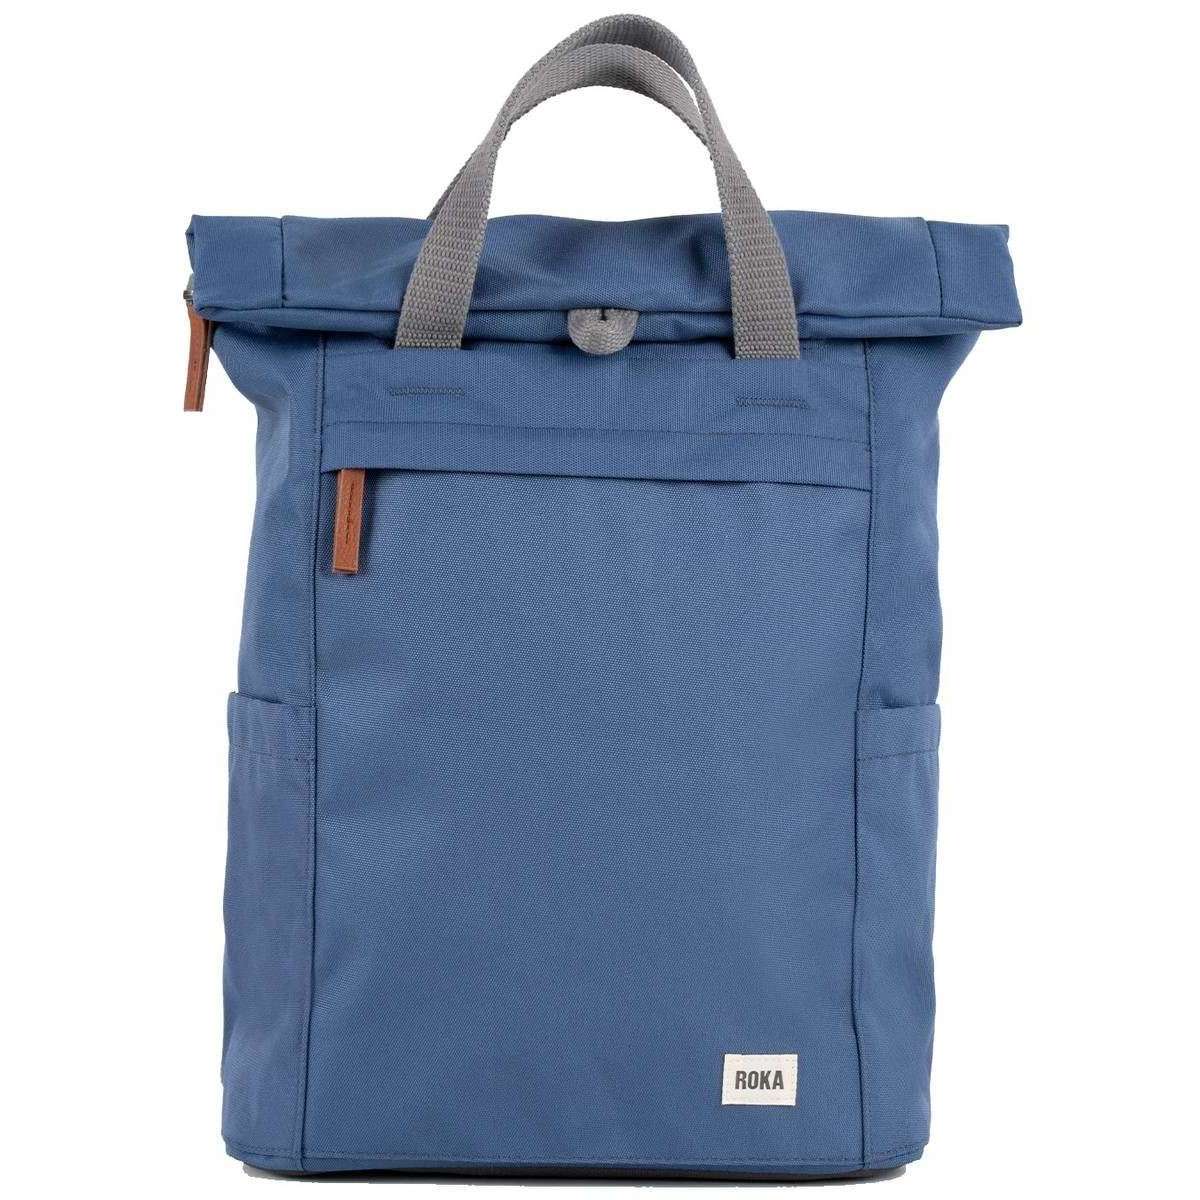 Roka Finchley A Medium Sustainable Canvas Backpack - Burnt Blue